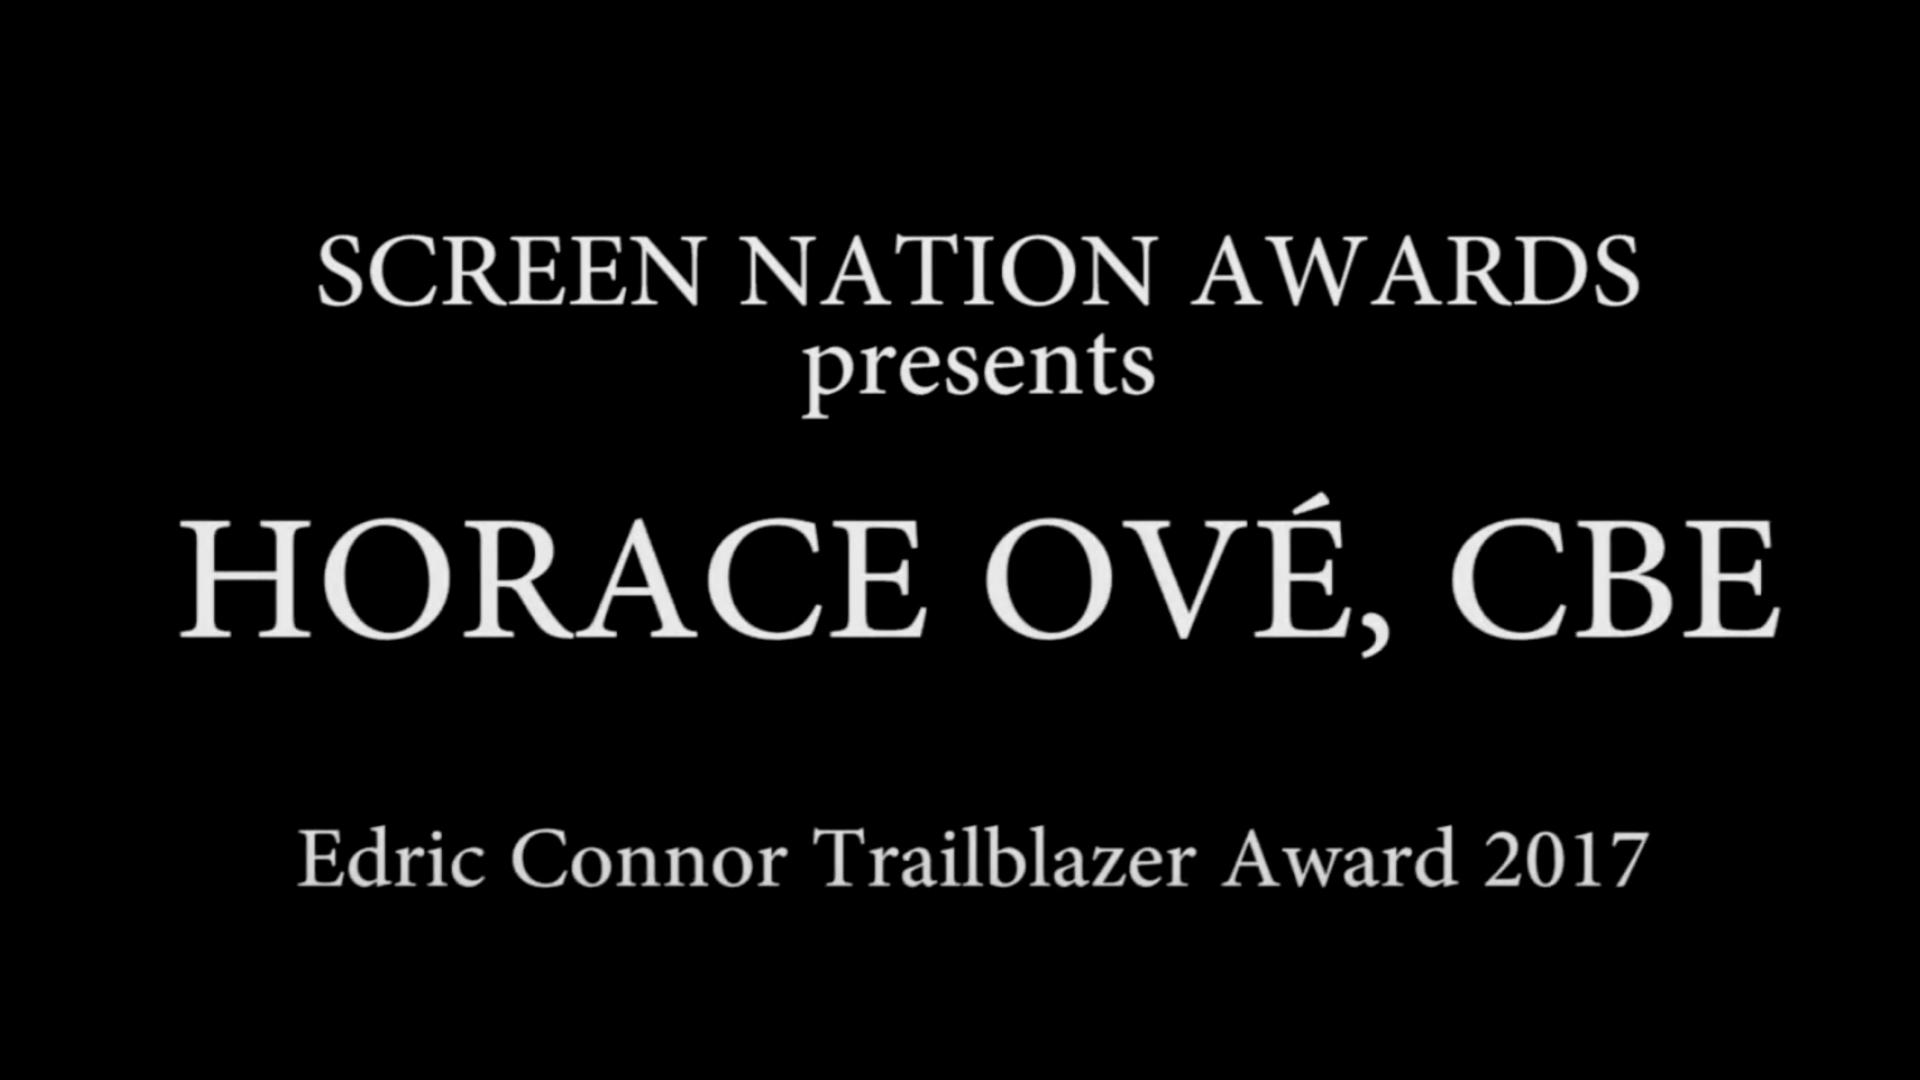 HORACE OVE CBE: Edric Connor Trailblazer Award 2017